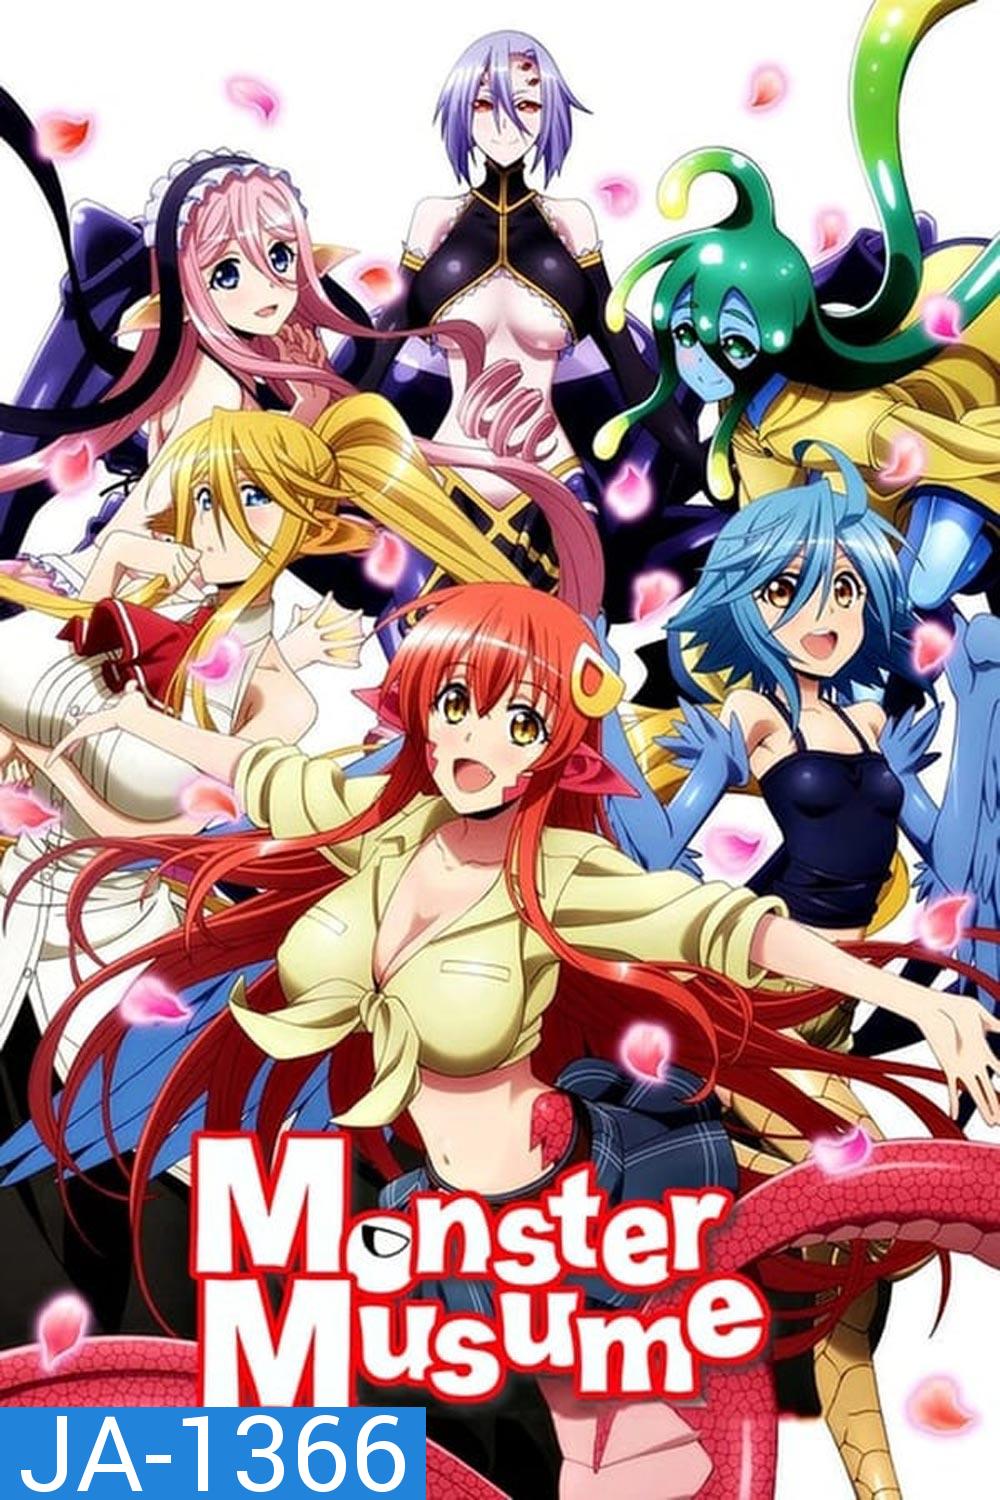 Monster Musume: Everyday Life with Monster Girls ชีวิตป่วนรักของสาวมอนสเตอร์ (2015)